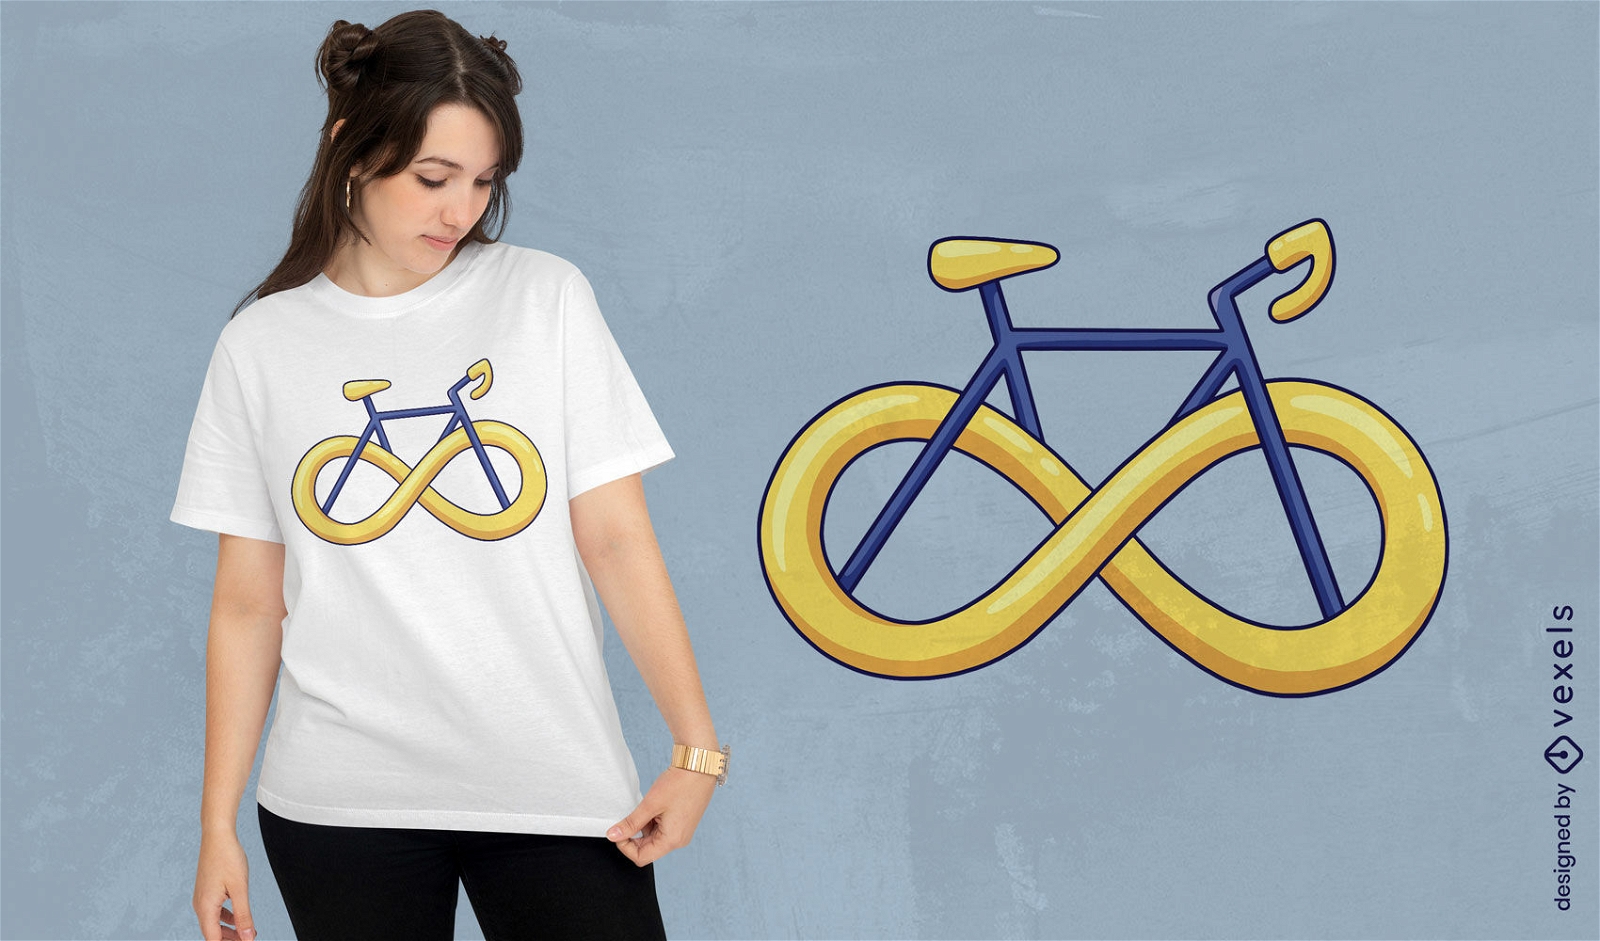 Diseño de camiseta de bicicleta con símbolo de infinito.